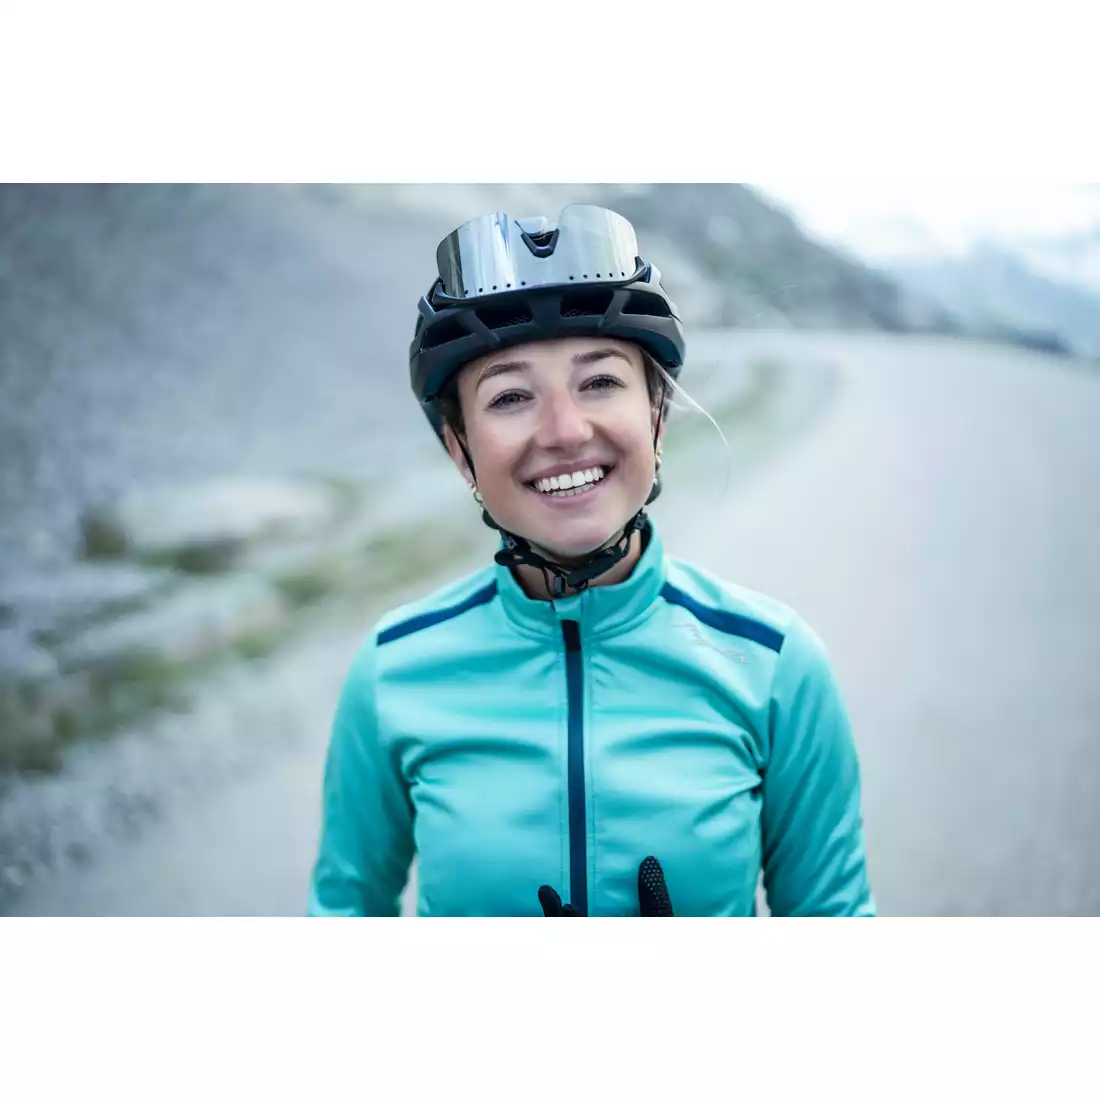 ROGELLI PESARA women's winter cycling jacket, turquoise